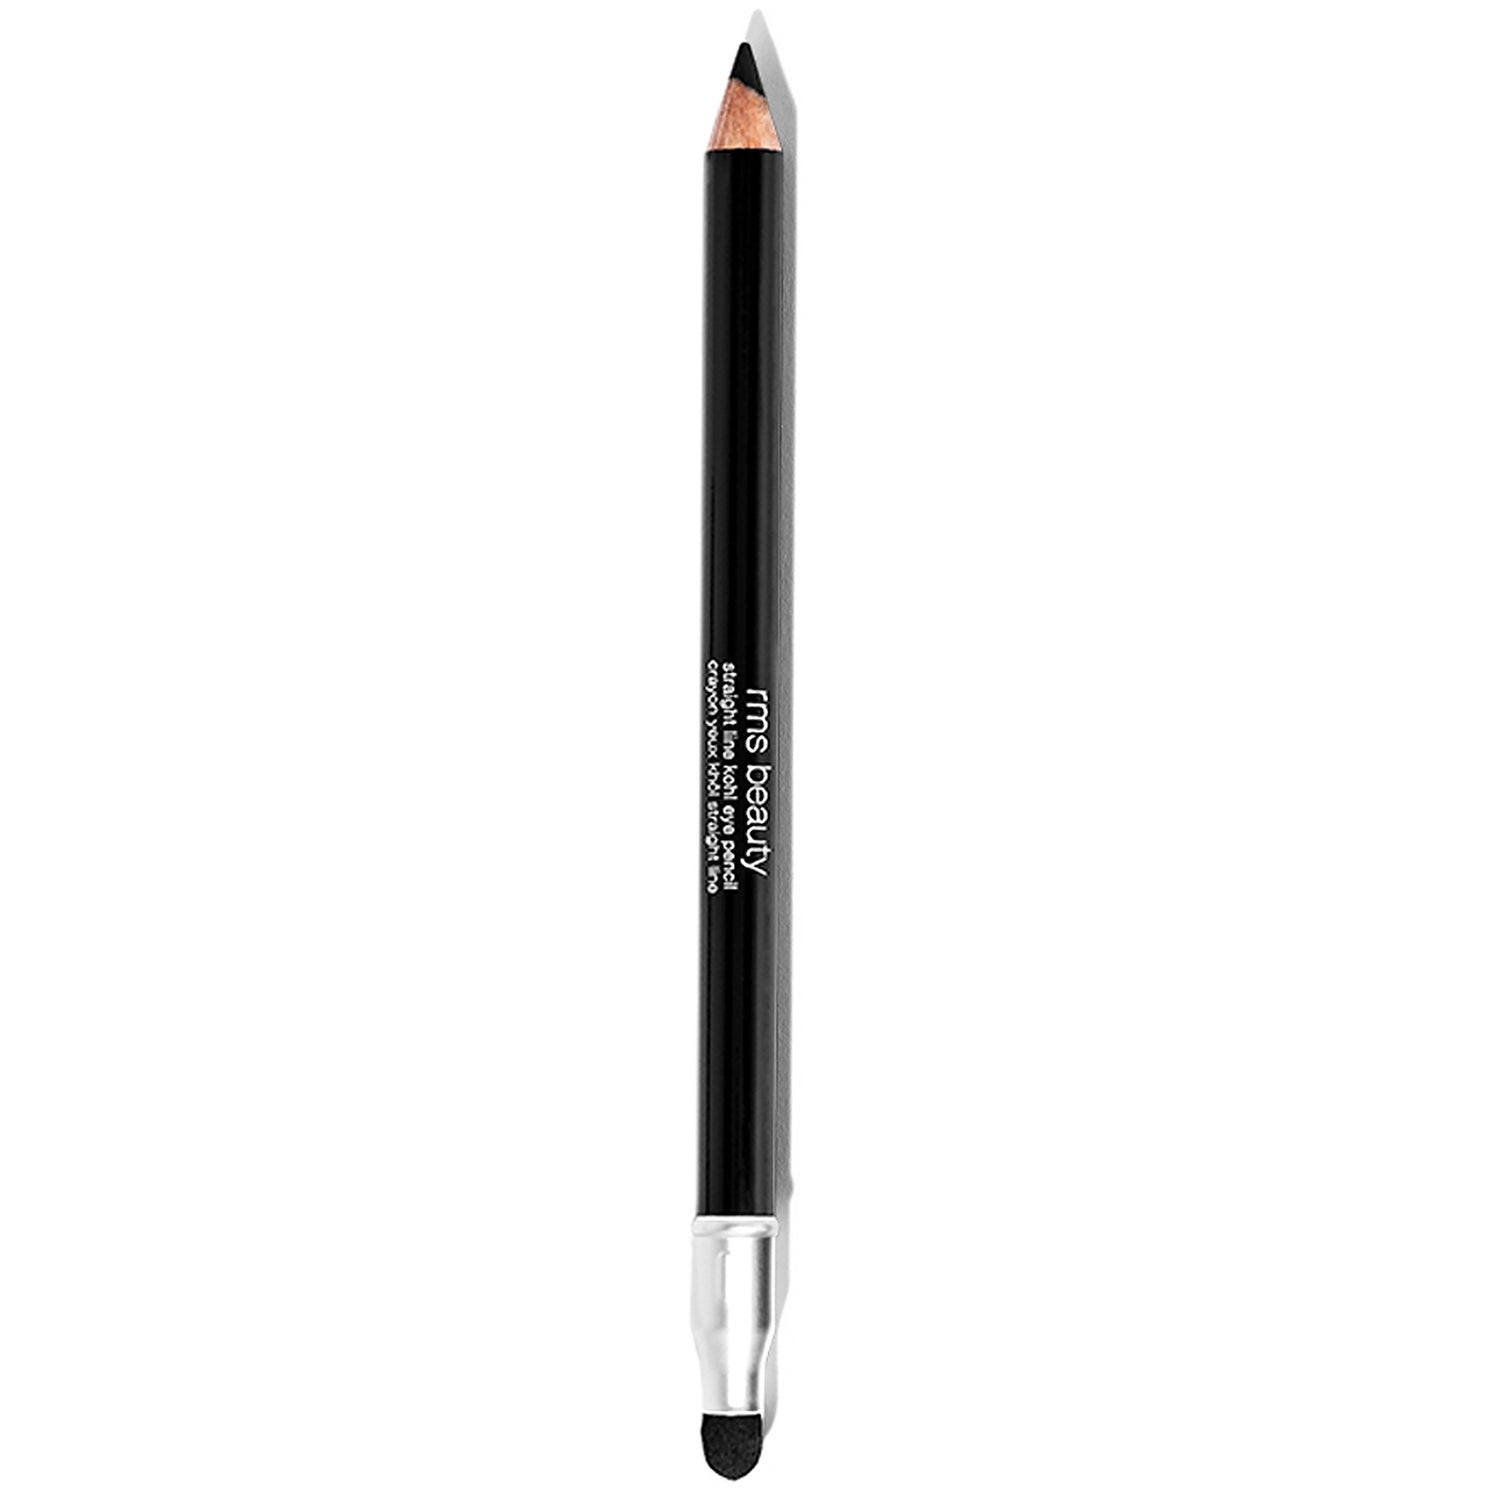 RMS Beauty Straight Line Kohl Eye Pencil 1.08g (Various Shades)